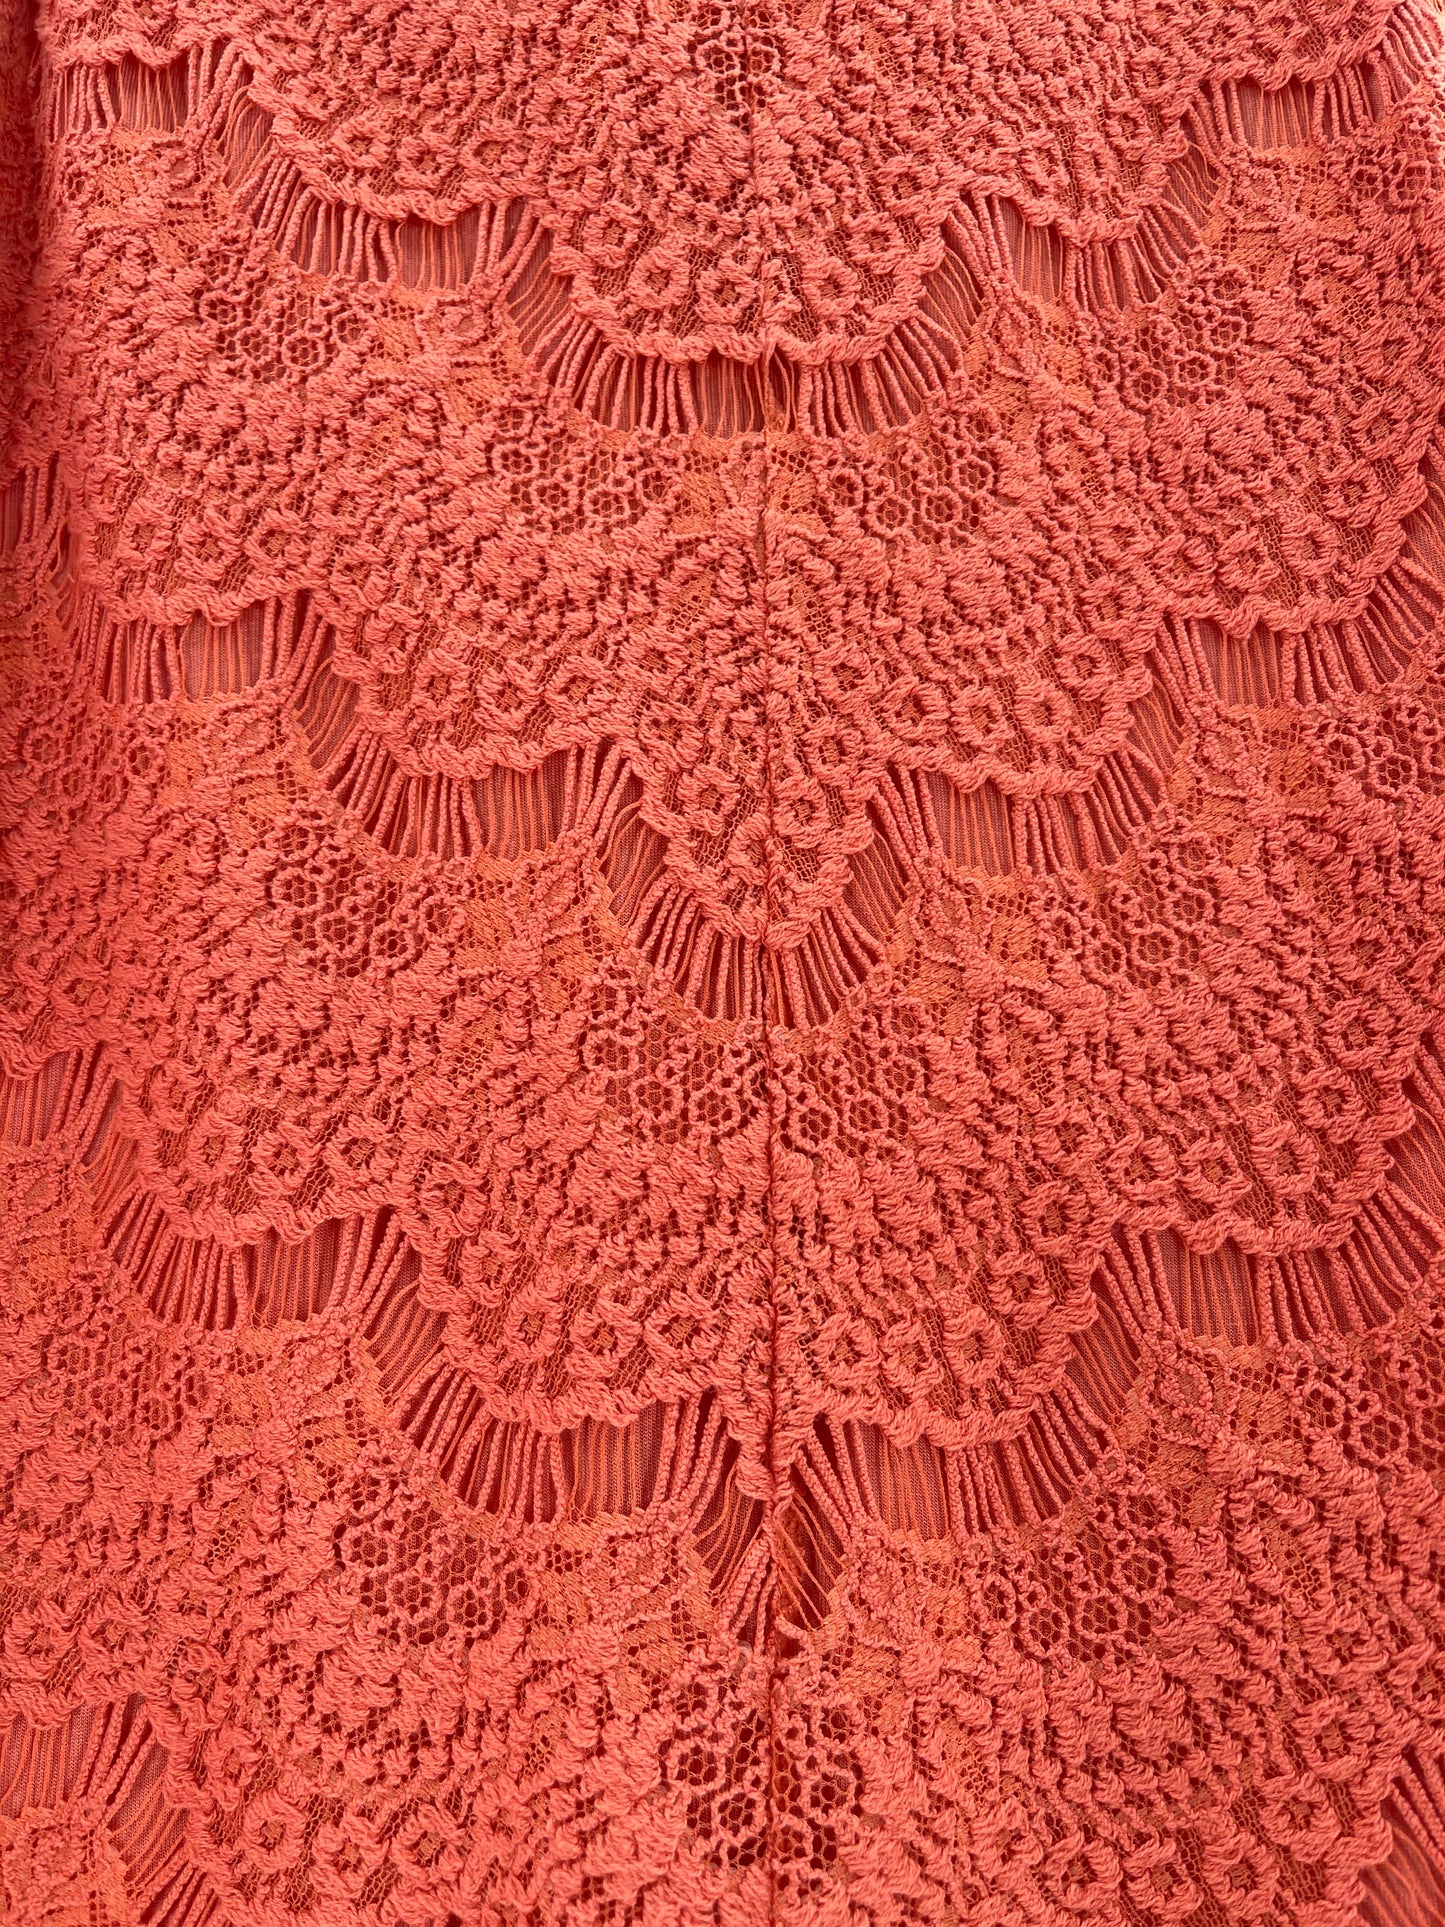 Free People Bodycon Coral Lace Mini Dress (XS)